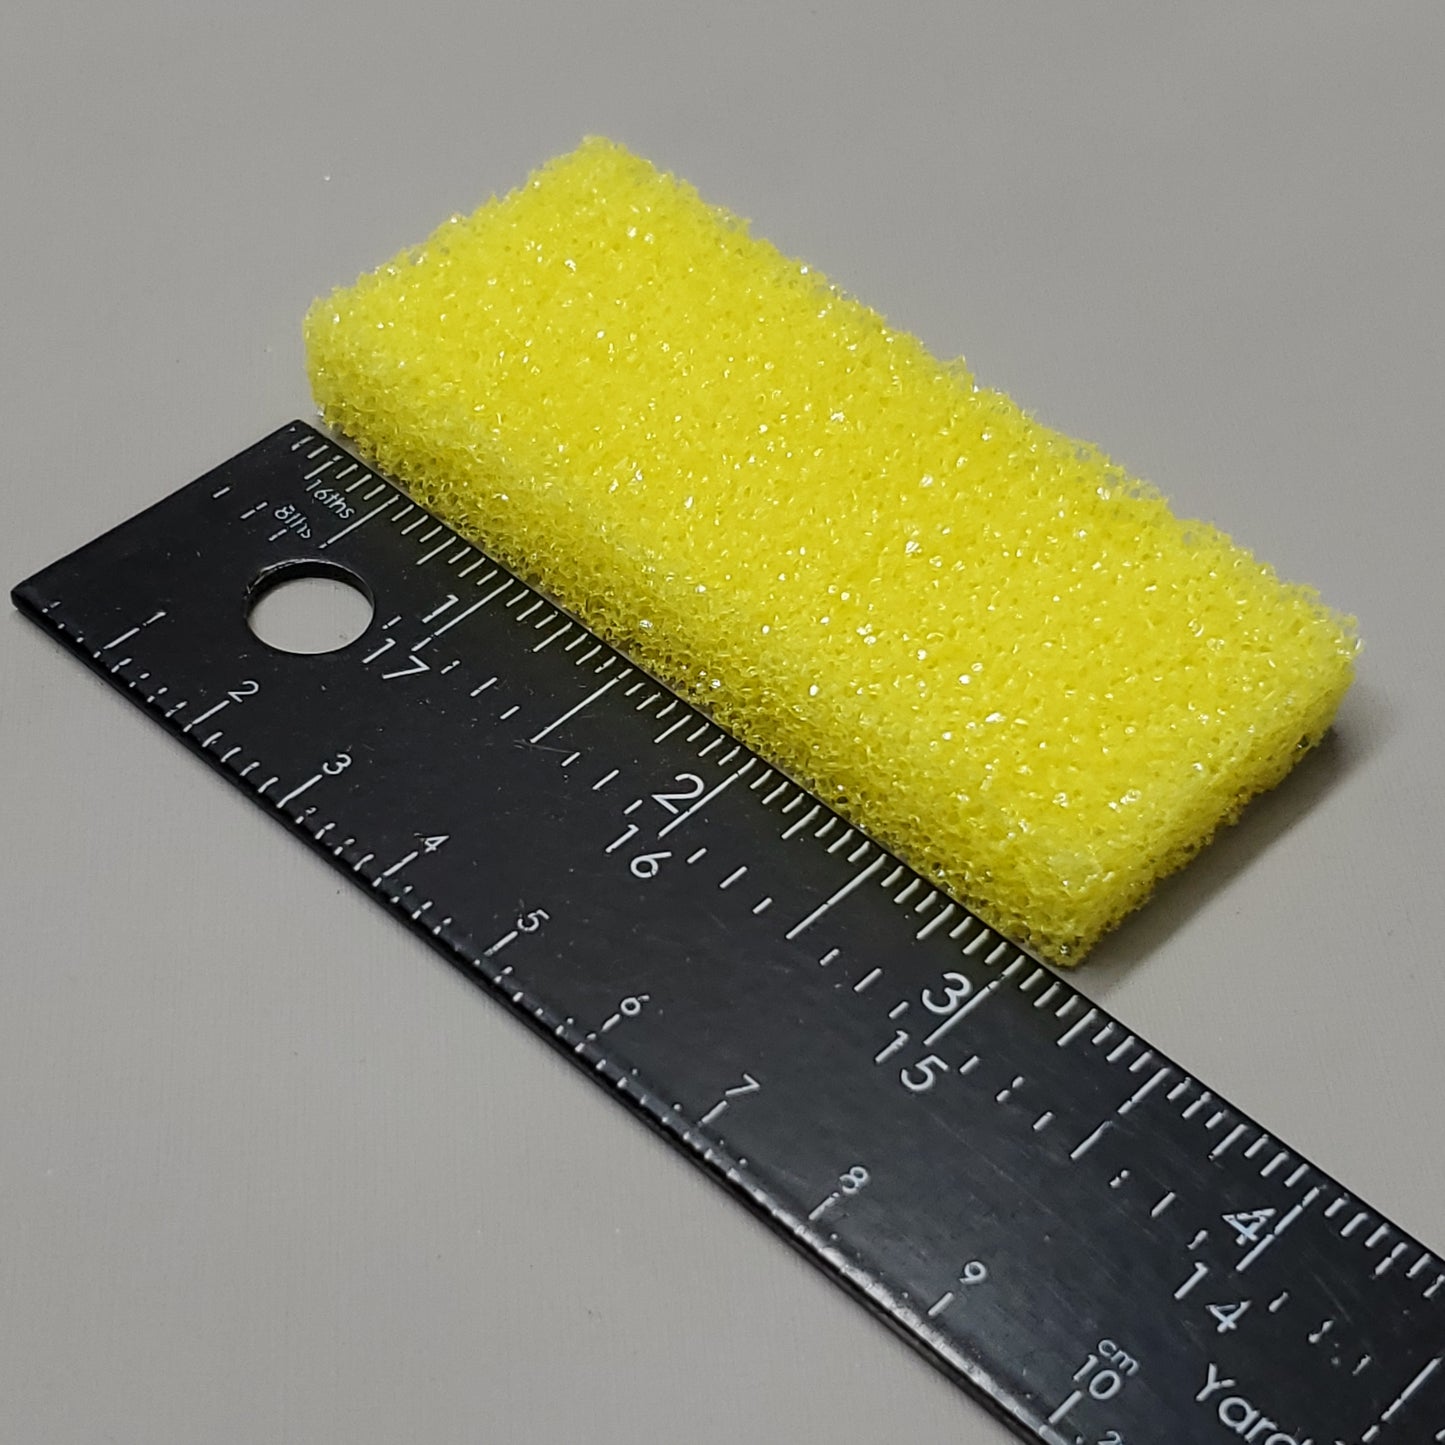 KARA Disposable Pumice Coarse Scrub Pads Yellow 8x3.5x1.2 CM 1600 PCS (New)